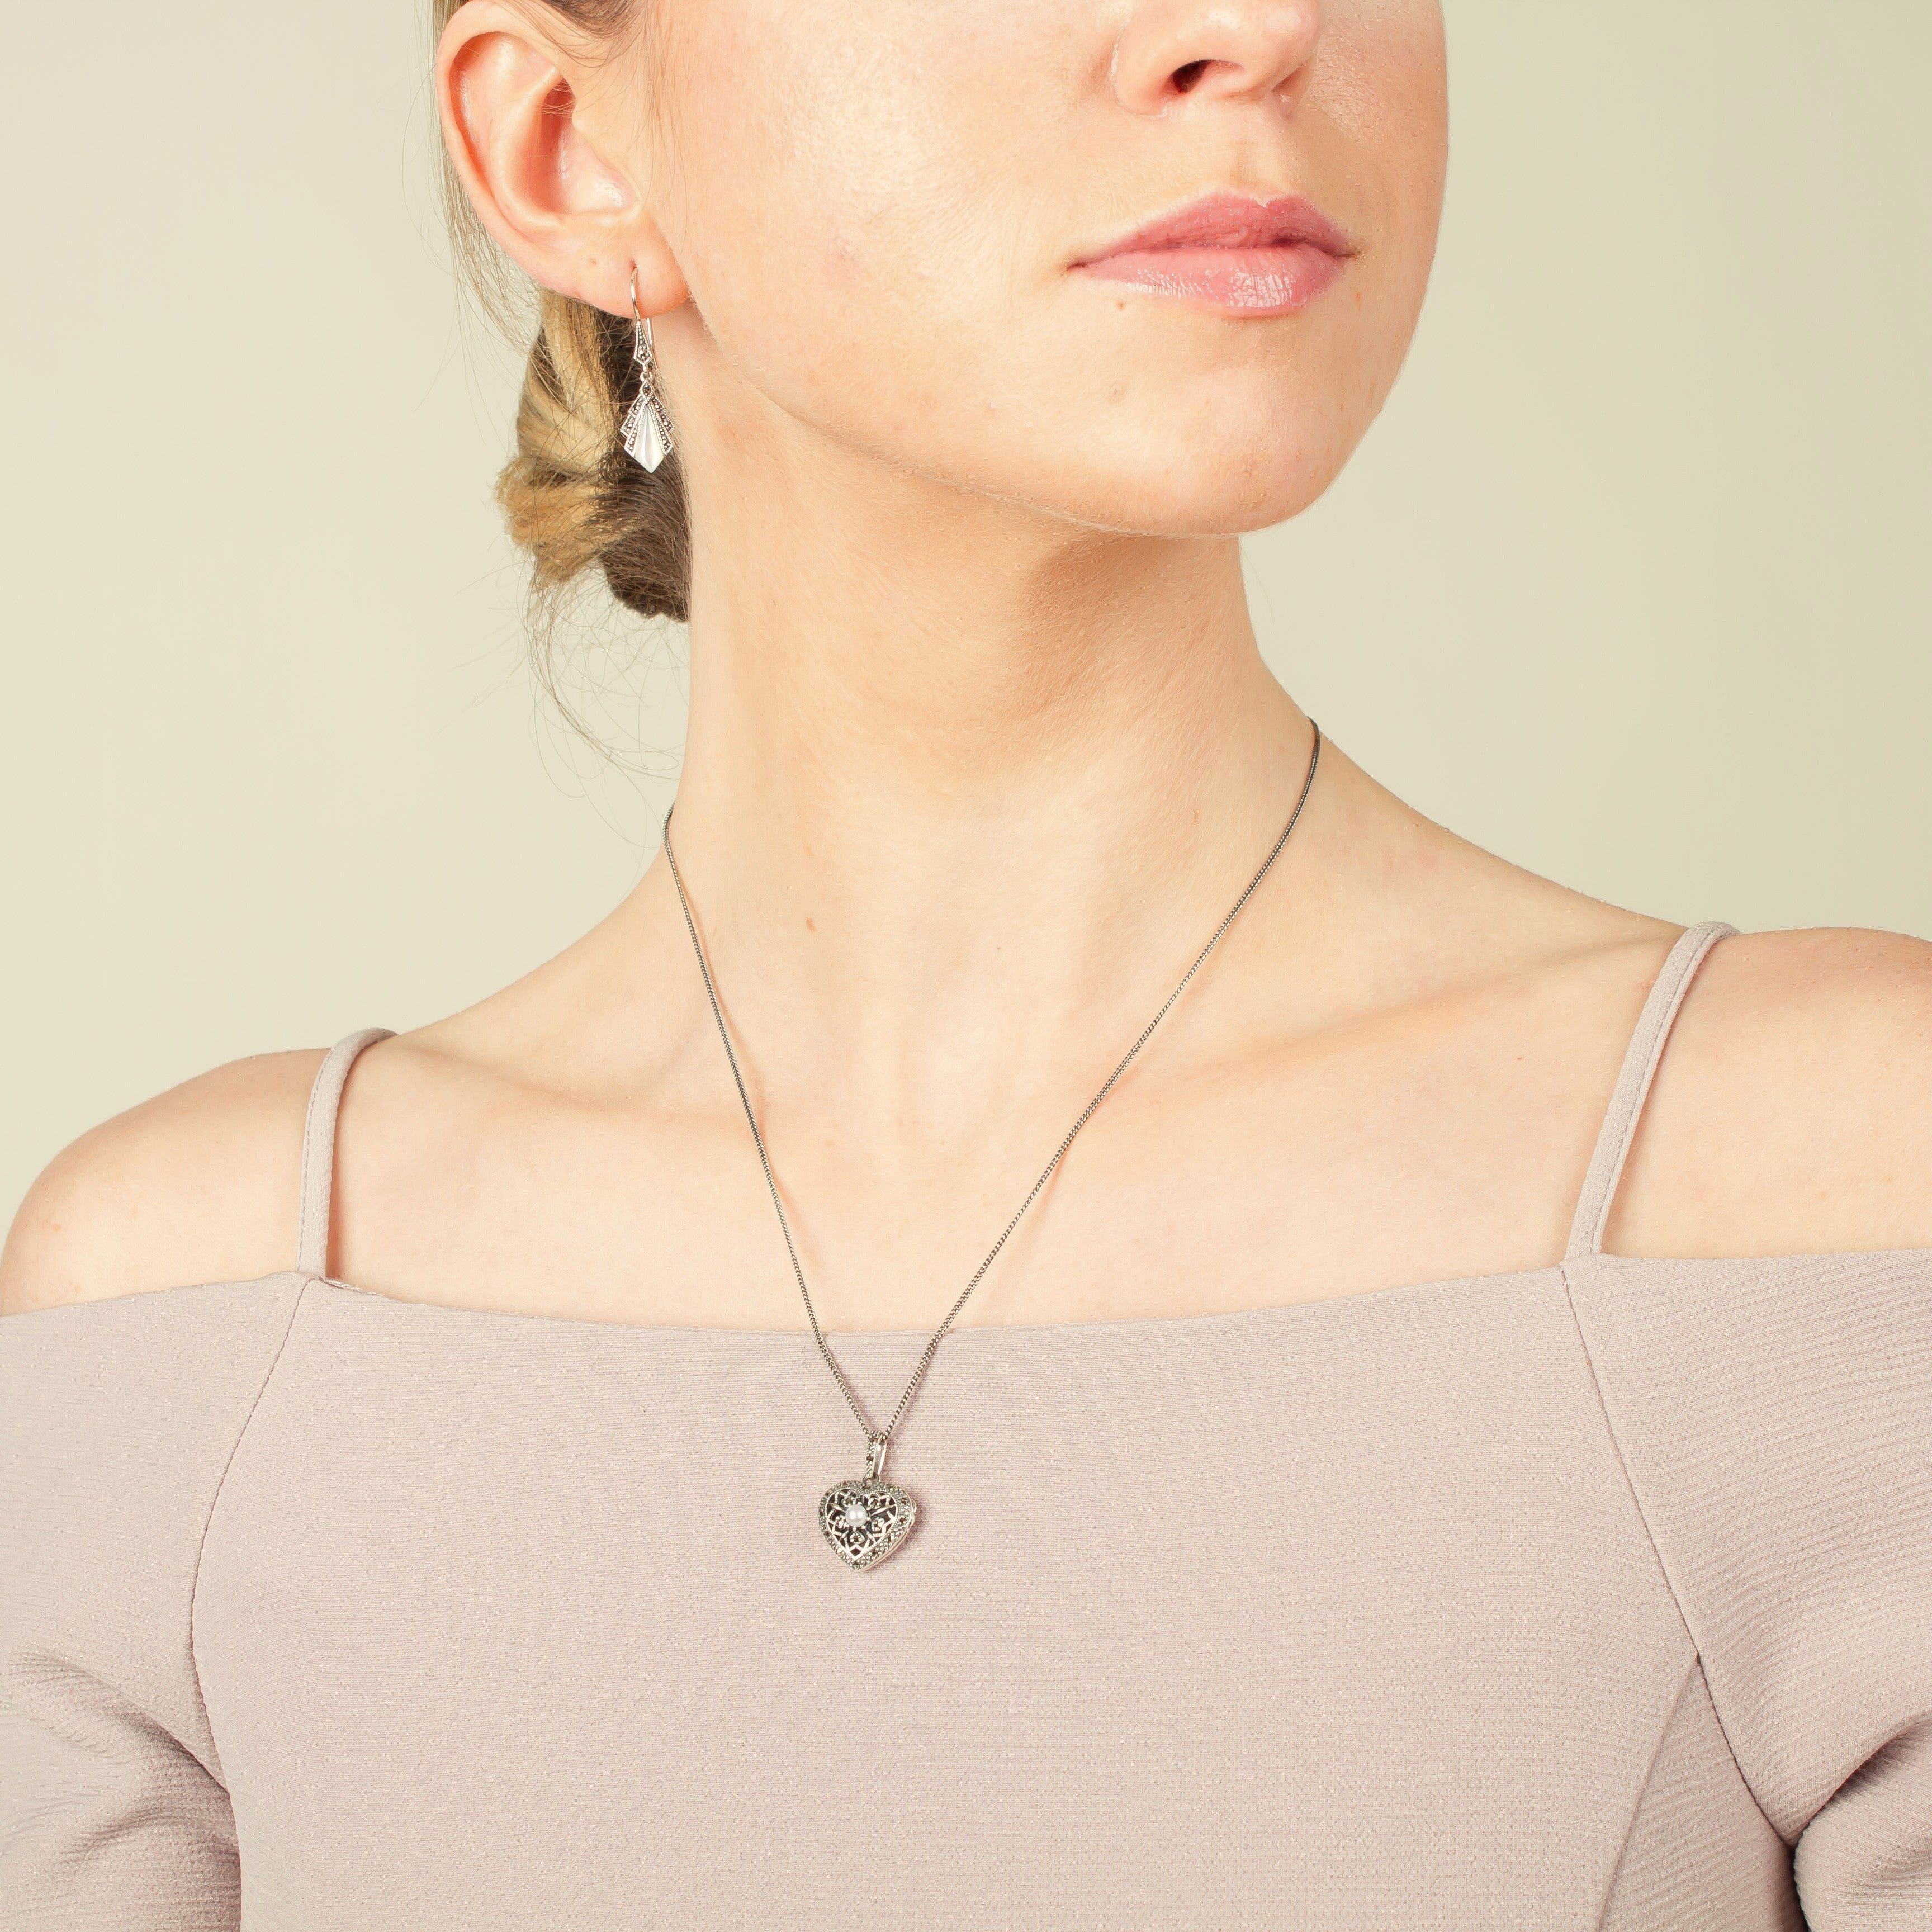 Art Nouveau Style Pearl & Marcasite Heart Necklace in 925 Sterling Silver - Gemondo